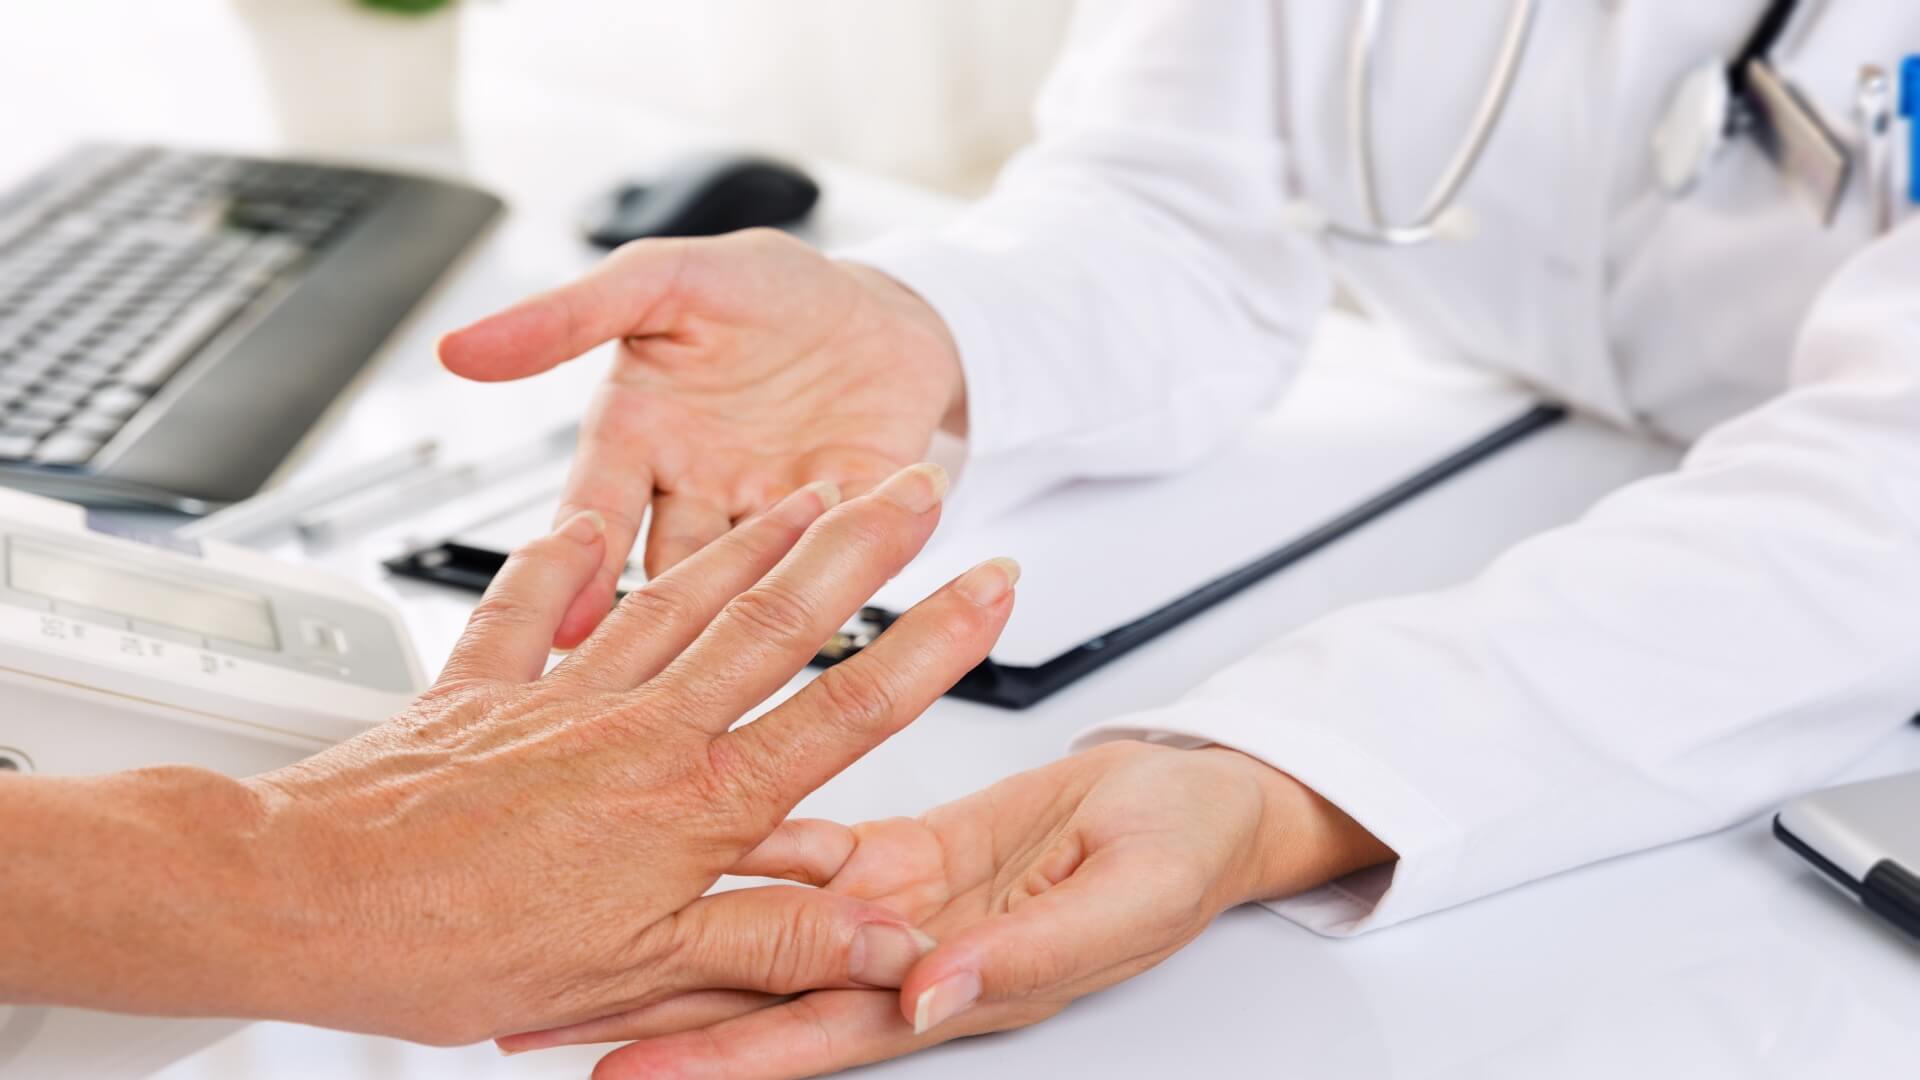 Can Rheumatoid Arthritis Be Treated?